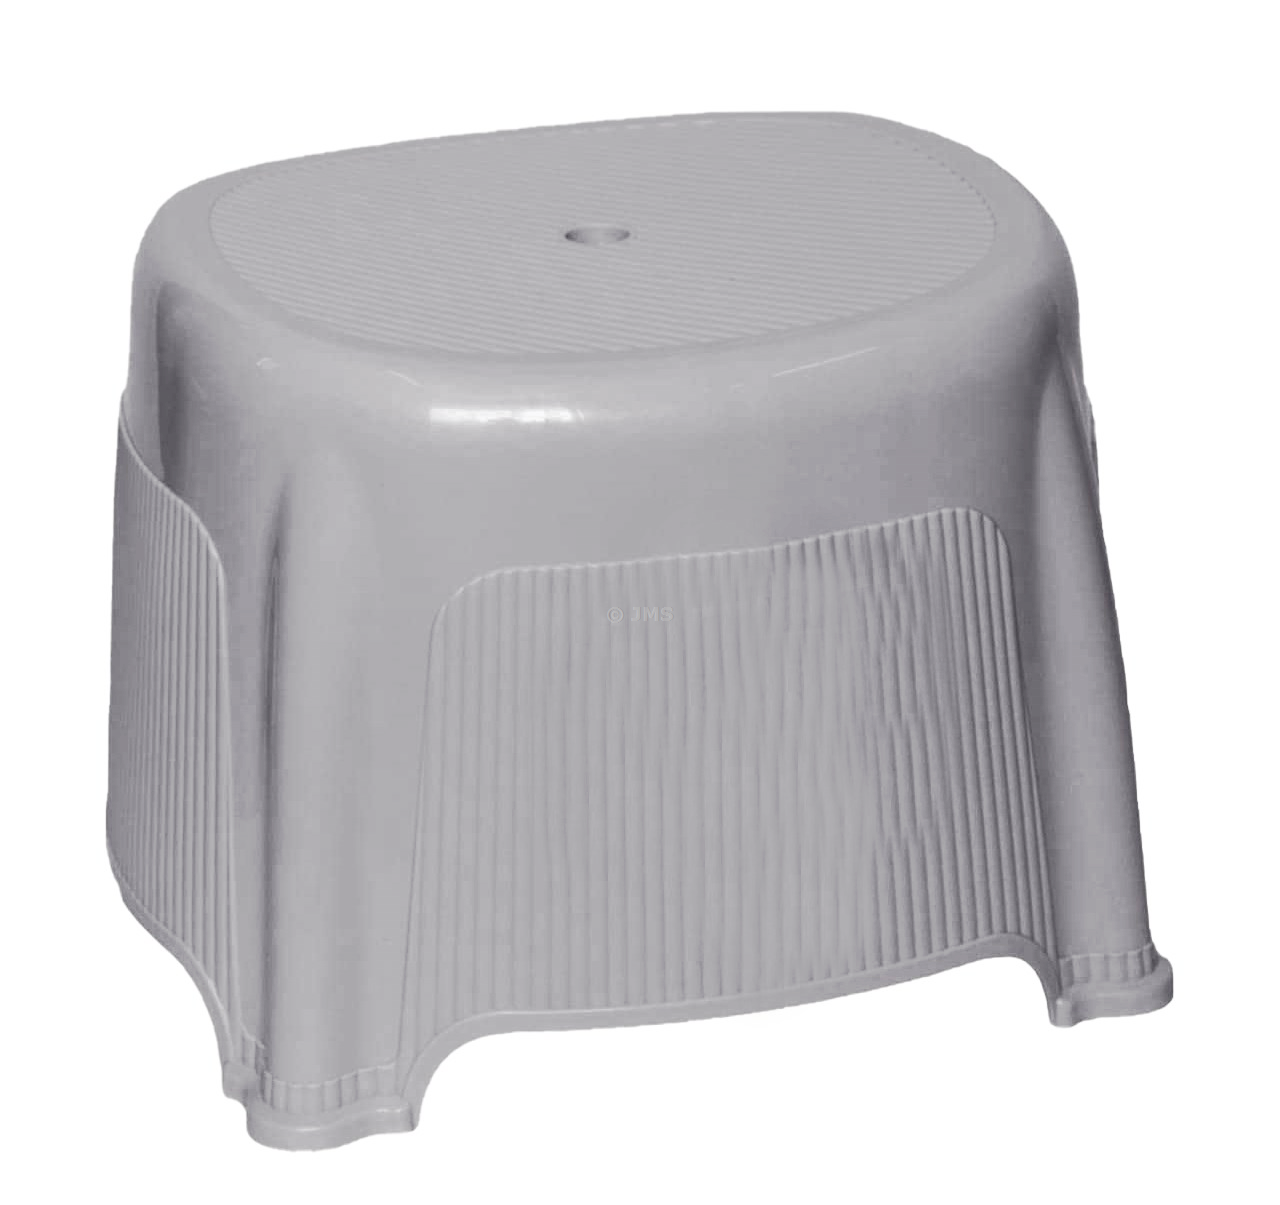 Plastic Bath Stool Shower Chair Anti Slip Leakage Holes Portable Adults Kids Elderly Seniors Foot Rest - Silver